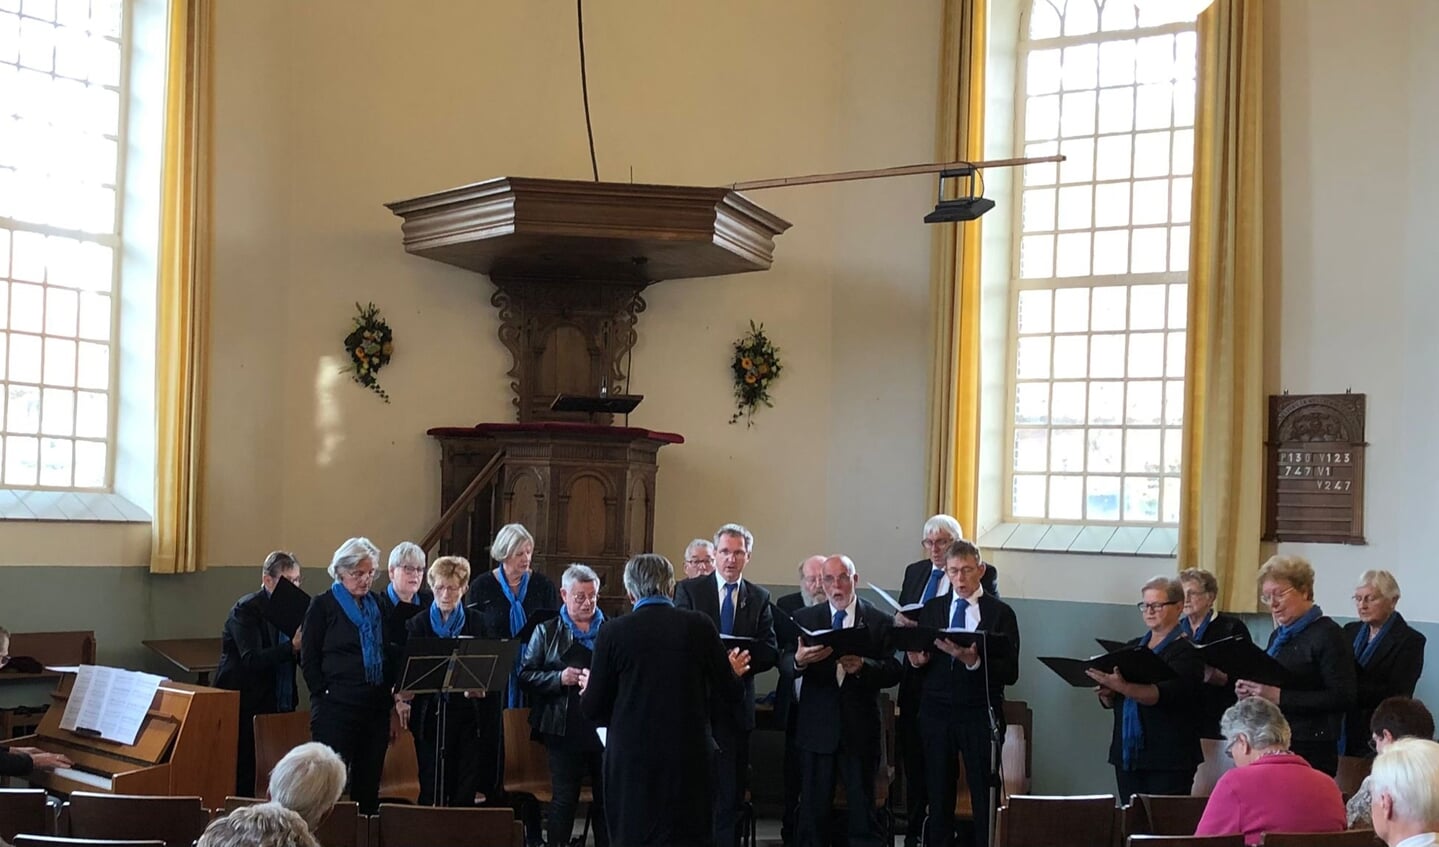 Concert Comt nu met Sangh in oktober in kerk Gelselaar, met medewerking van Stefan Potman op accordeon. Foto: PR